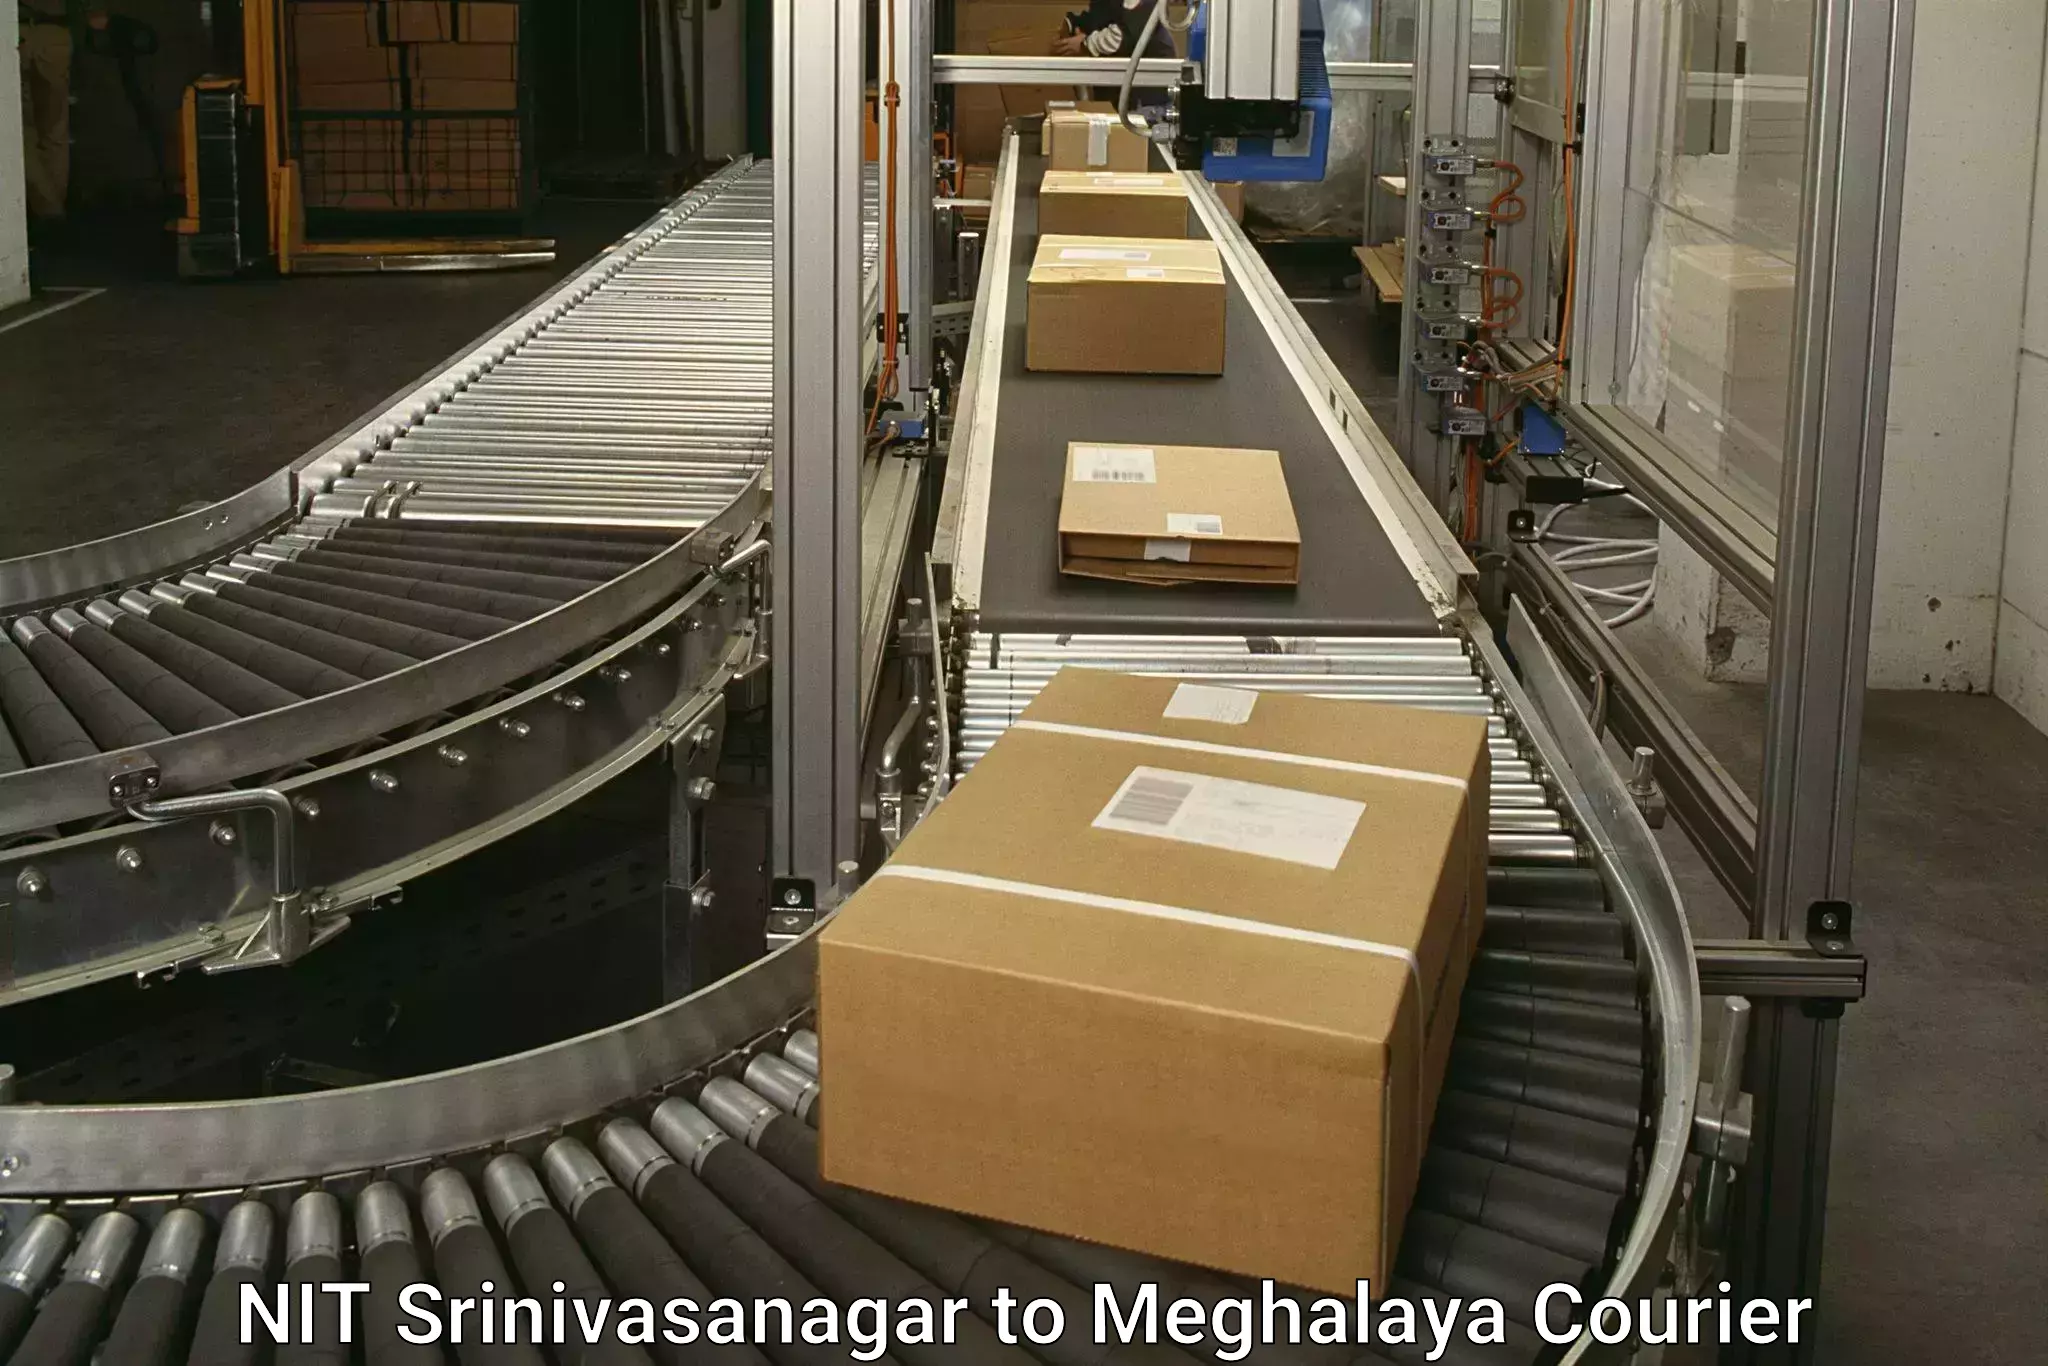 Digital courier platforms NIT Srinivasanagar to Meghalaya